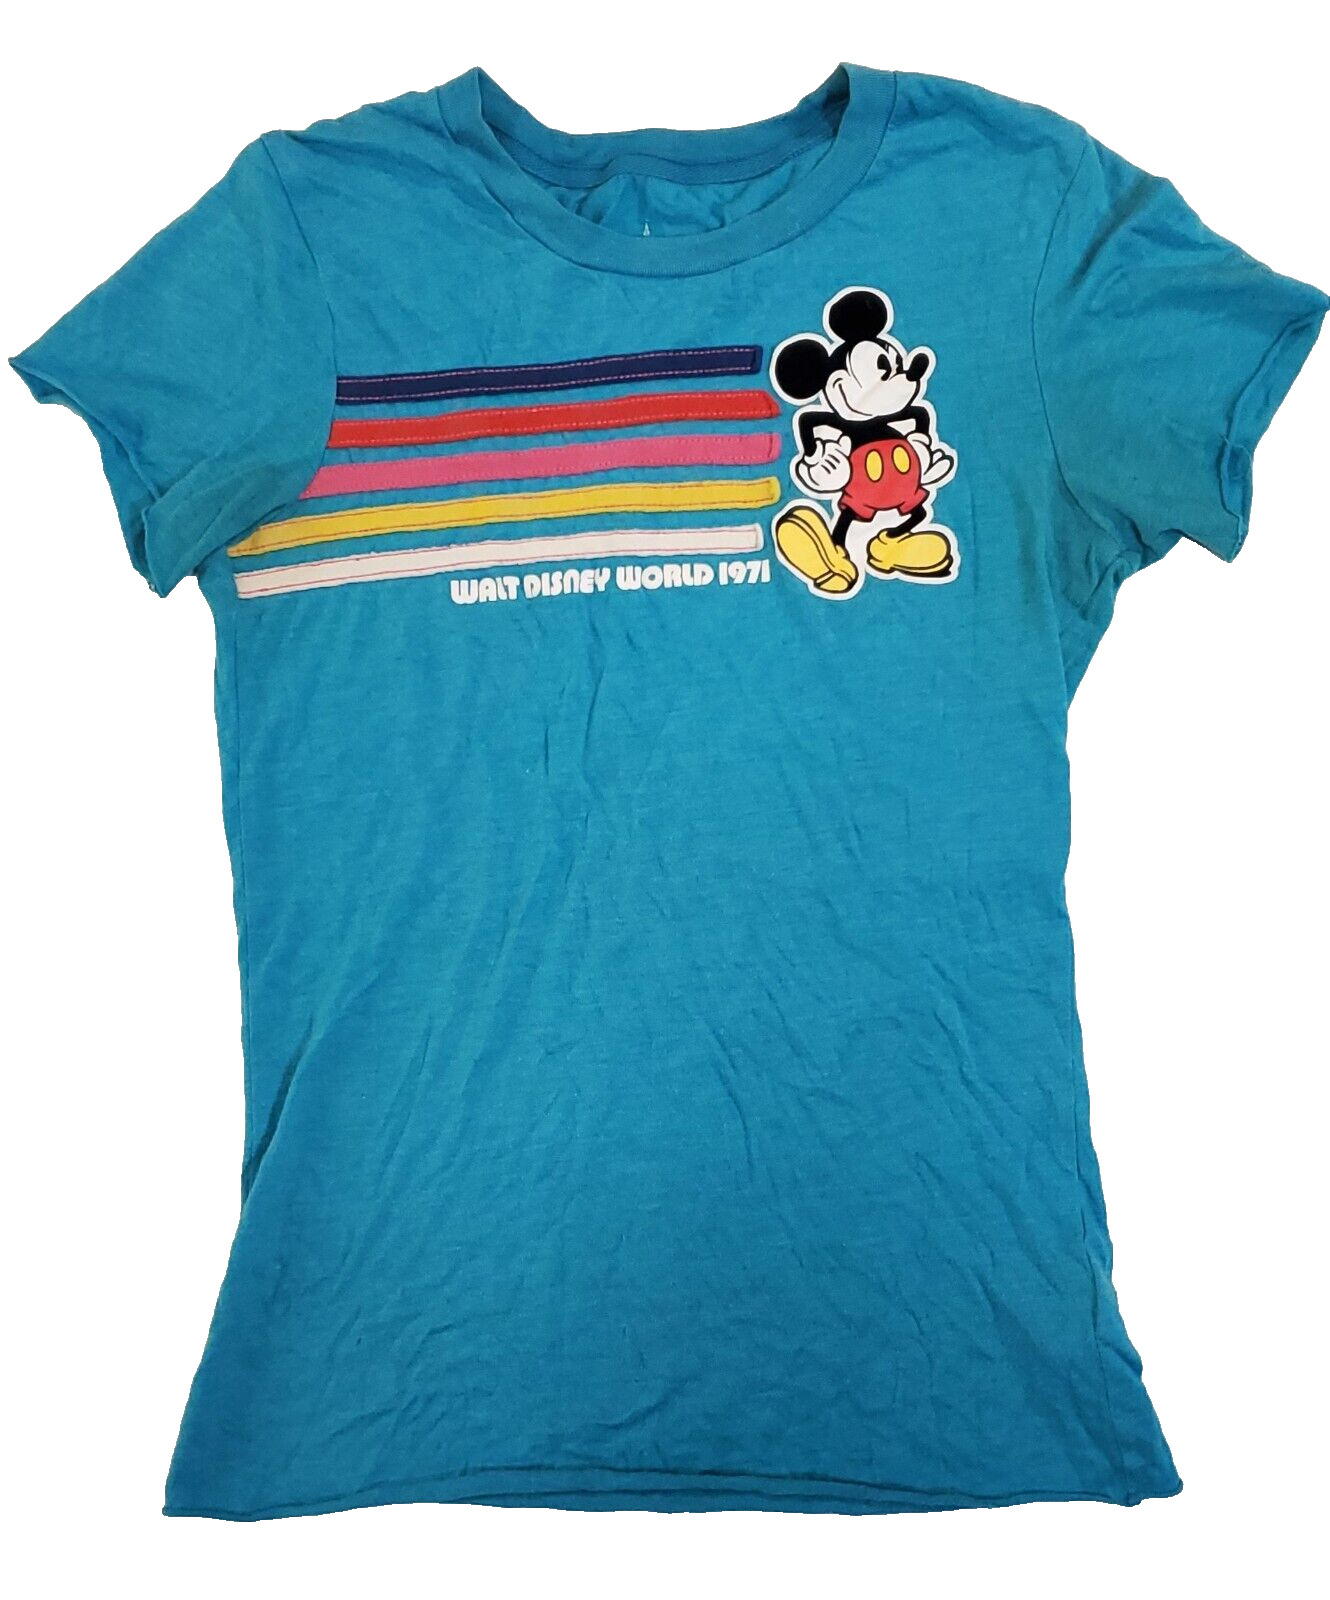 Blue Walt Disney Tshirt, authentic, XS, teen girls